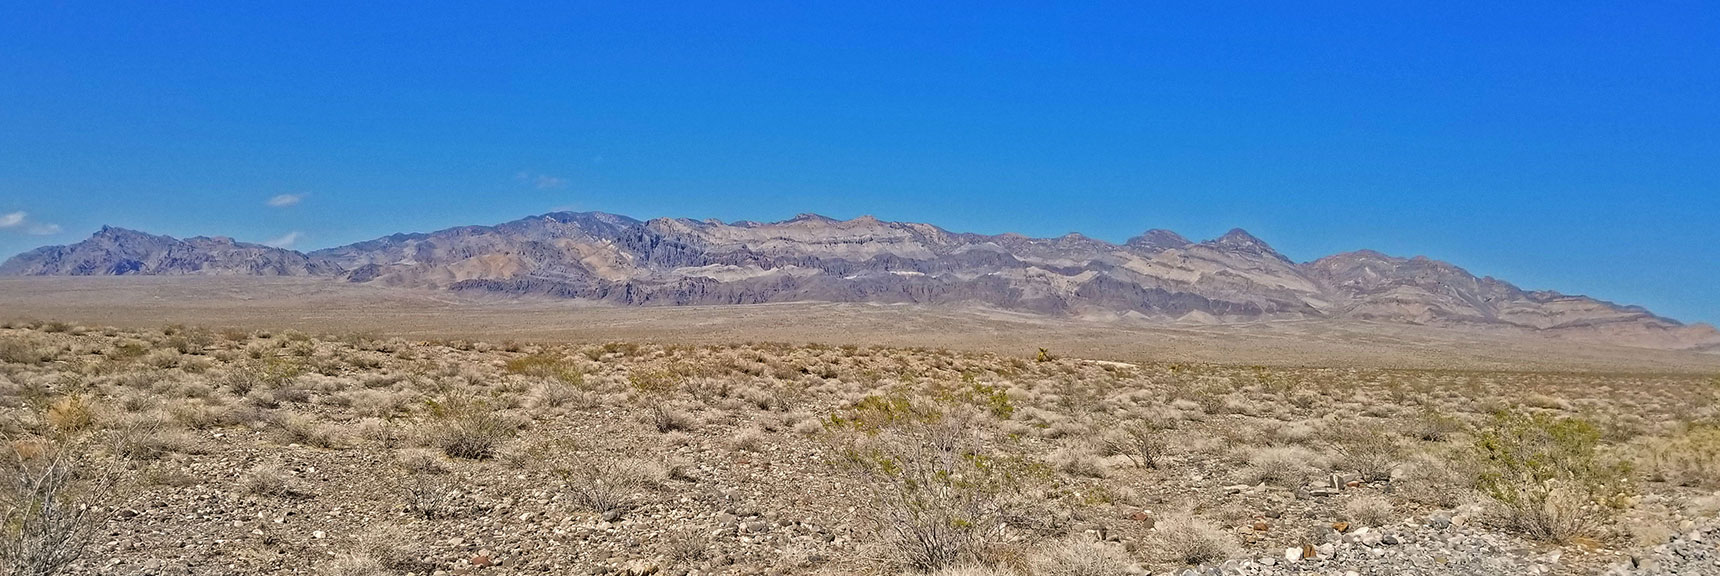 Sheep Range Viewed from Mormon Well Road | Fossil Ridge End to End | Sheep Range | Desert National Wildlife Refuge, Nevada